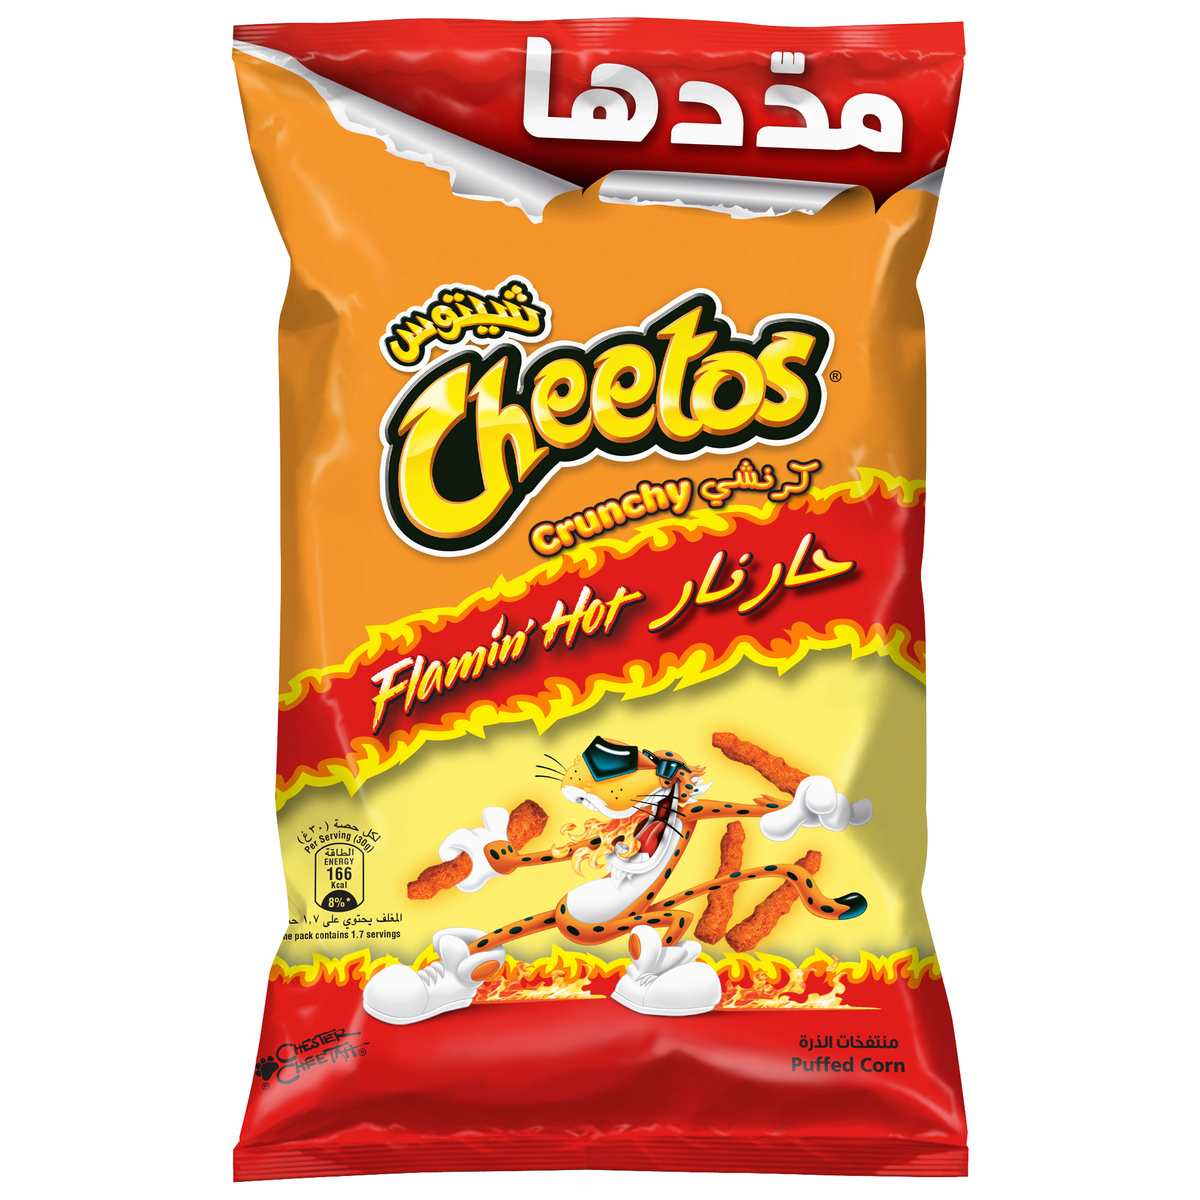 Cheetos Crunchy Flamin Hot 95 g